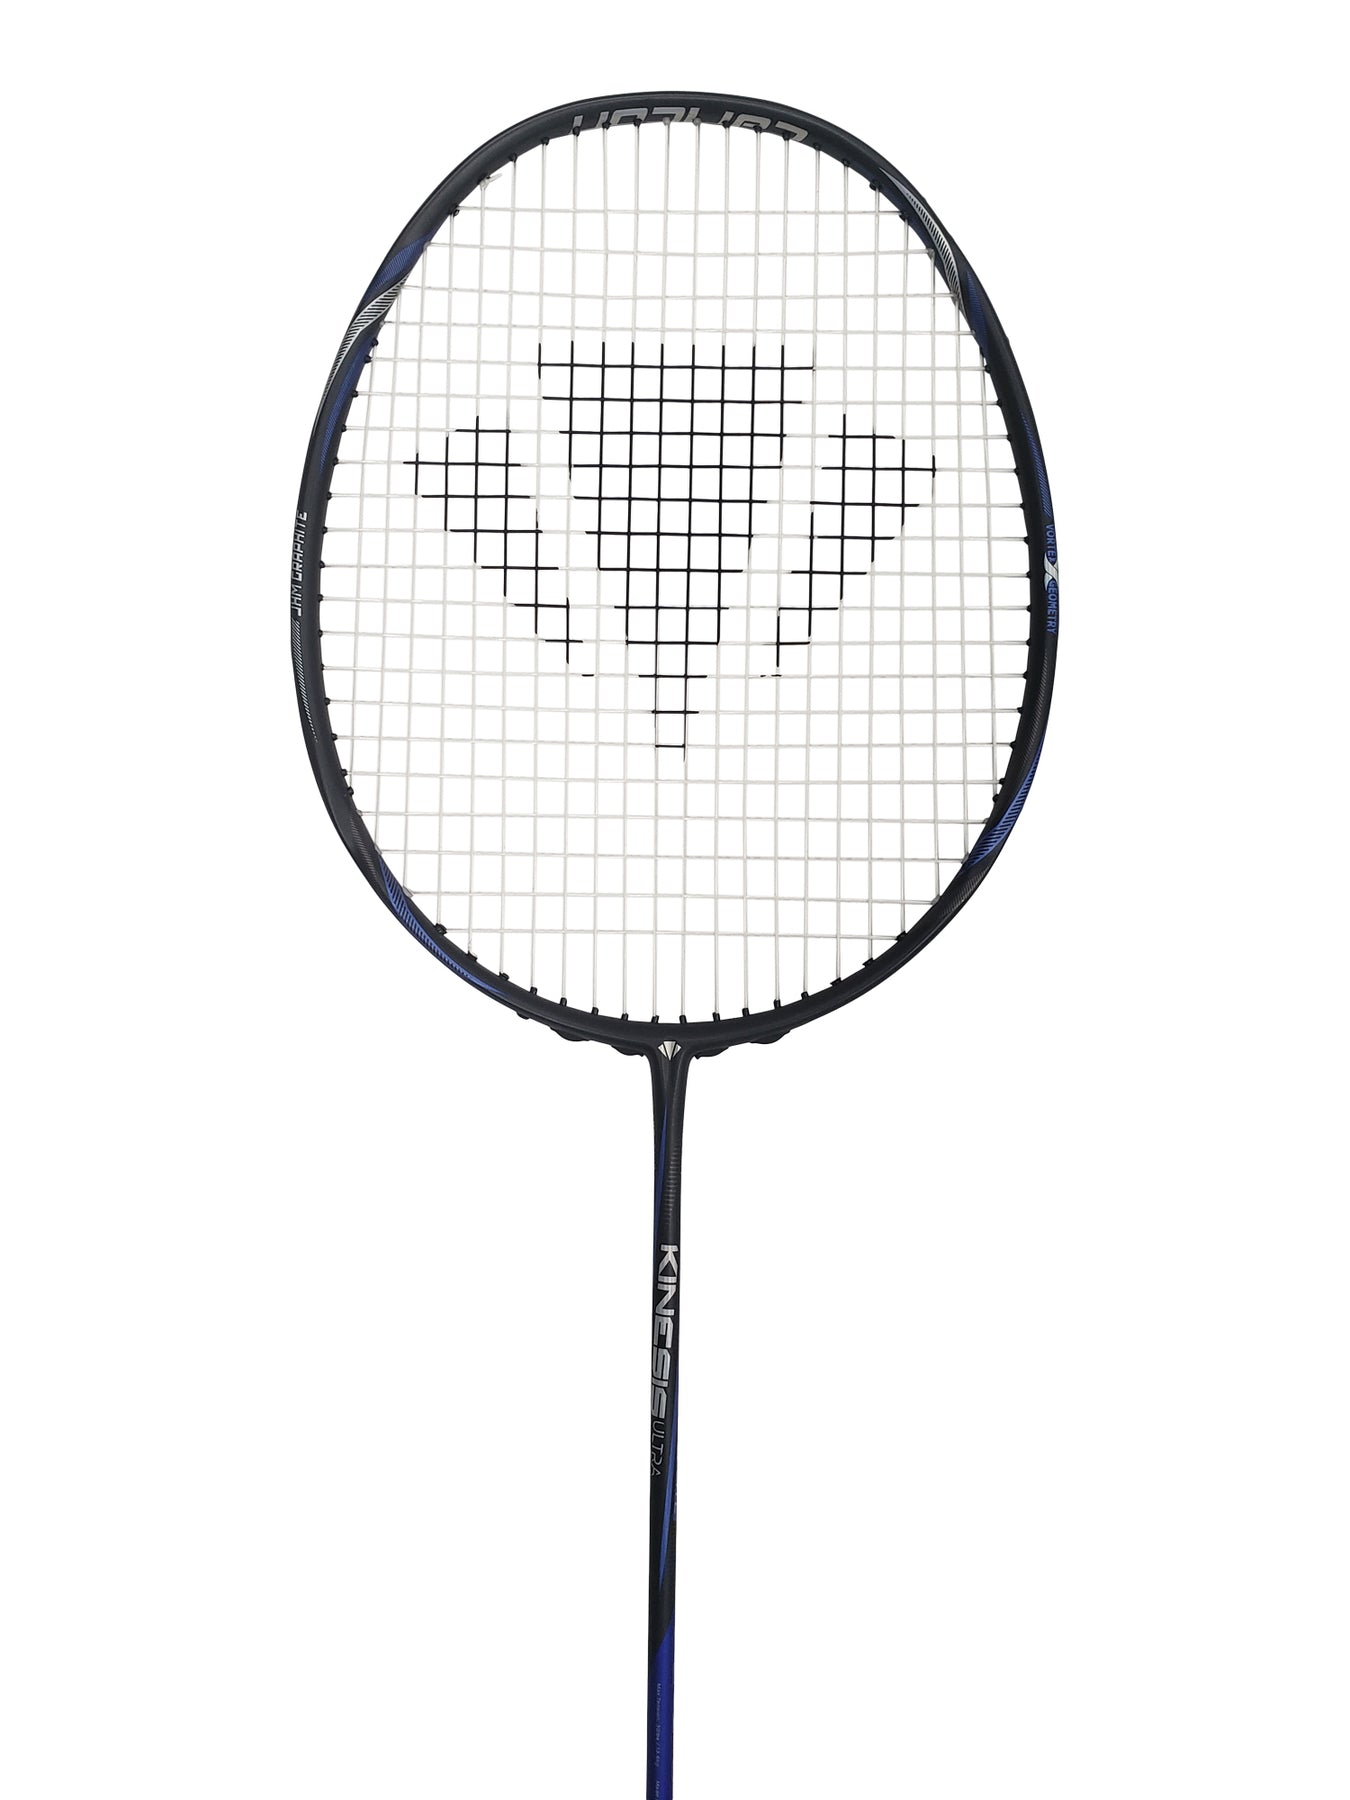 Carlton Badminton Rackets on Sale!